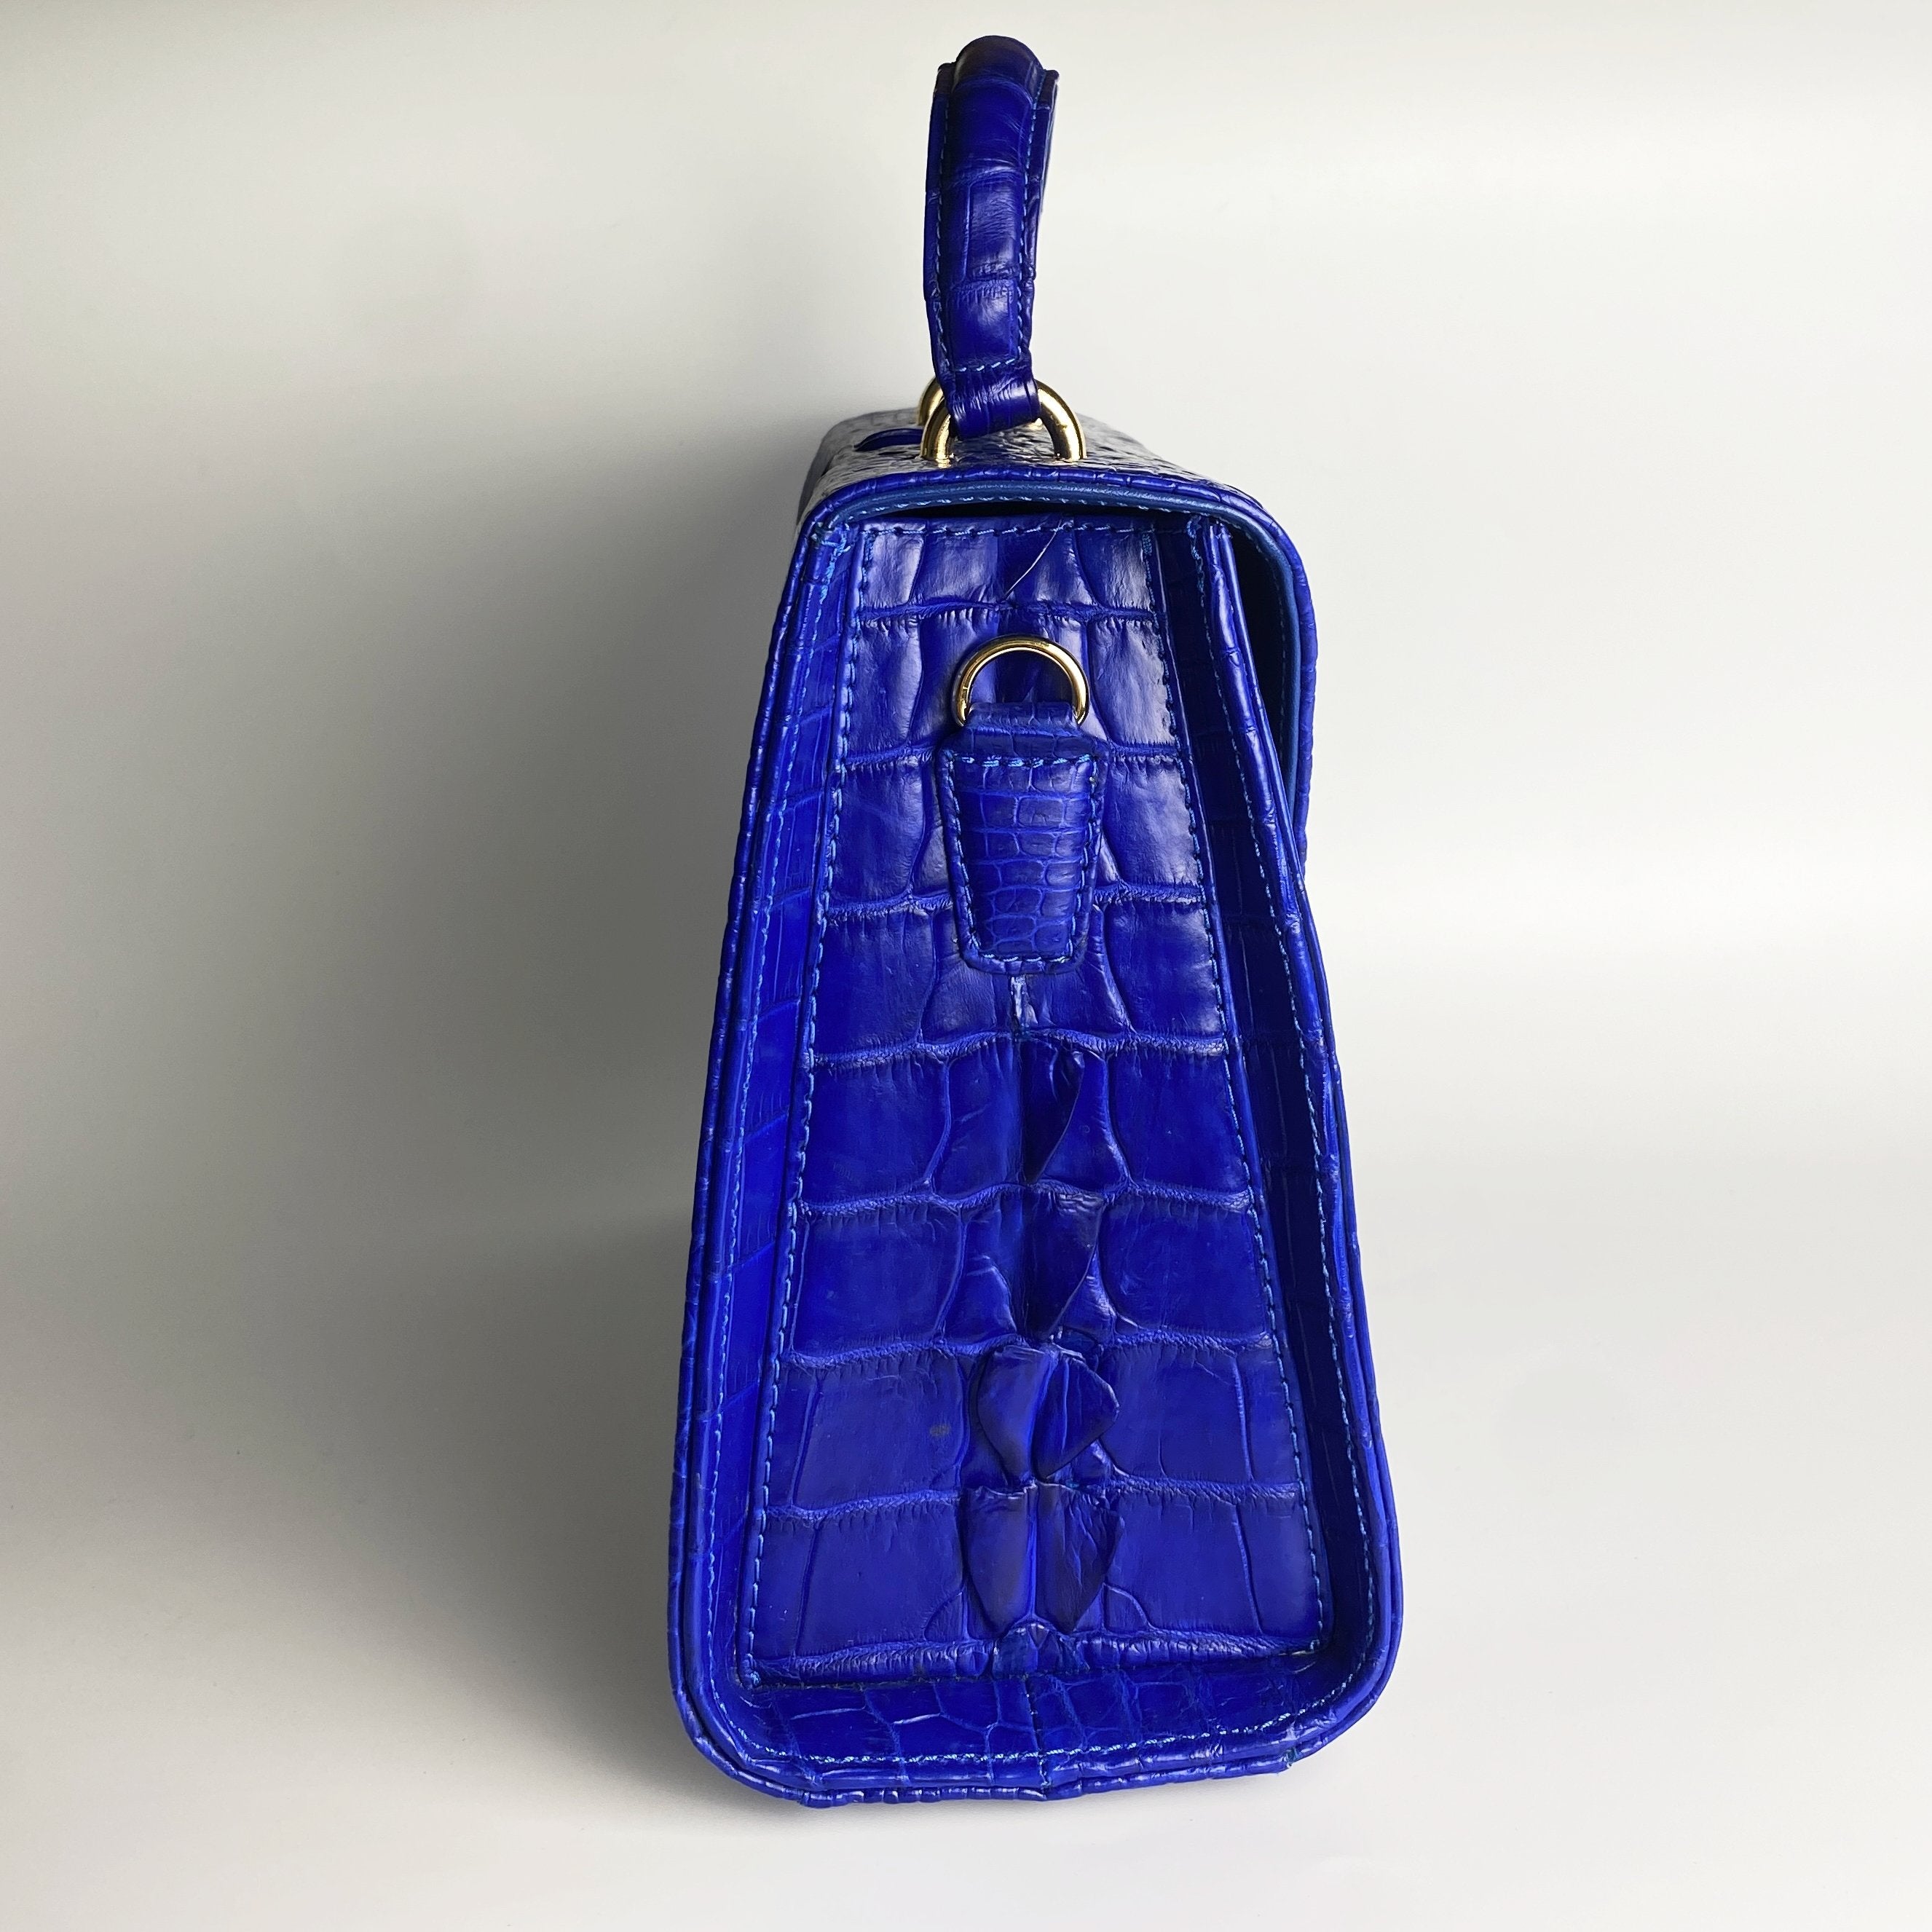 Women Crocodile Handbags Top Handle Alligator Leather Shoulder Messenger Bag Lady Fashion Daily Totes - Blue